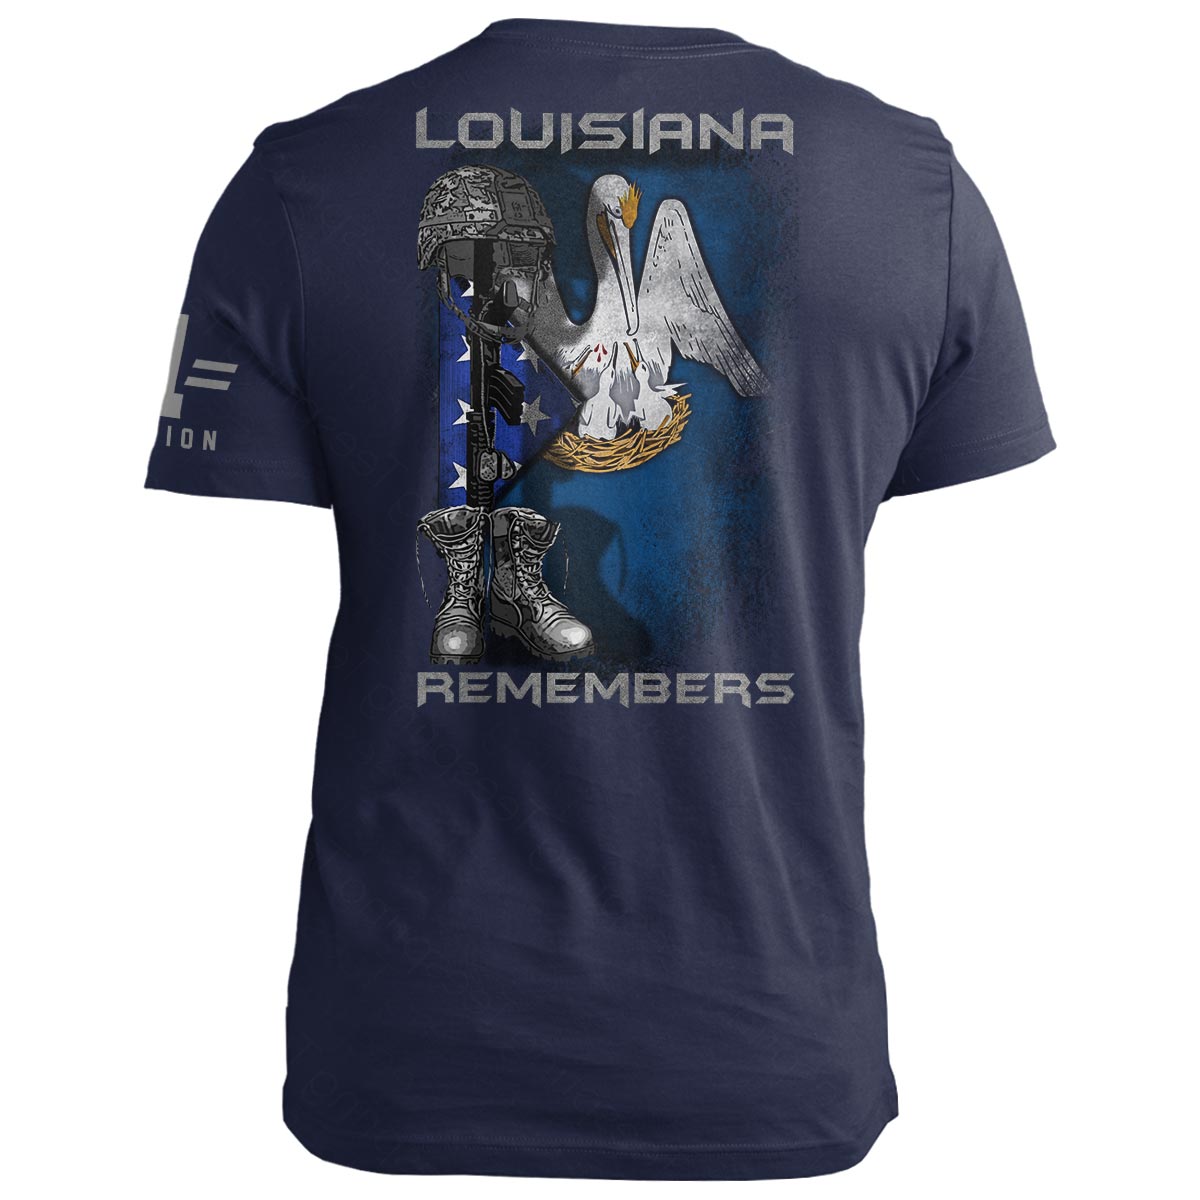 Louisiana Remembers